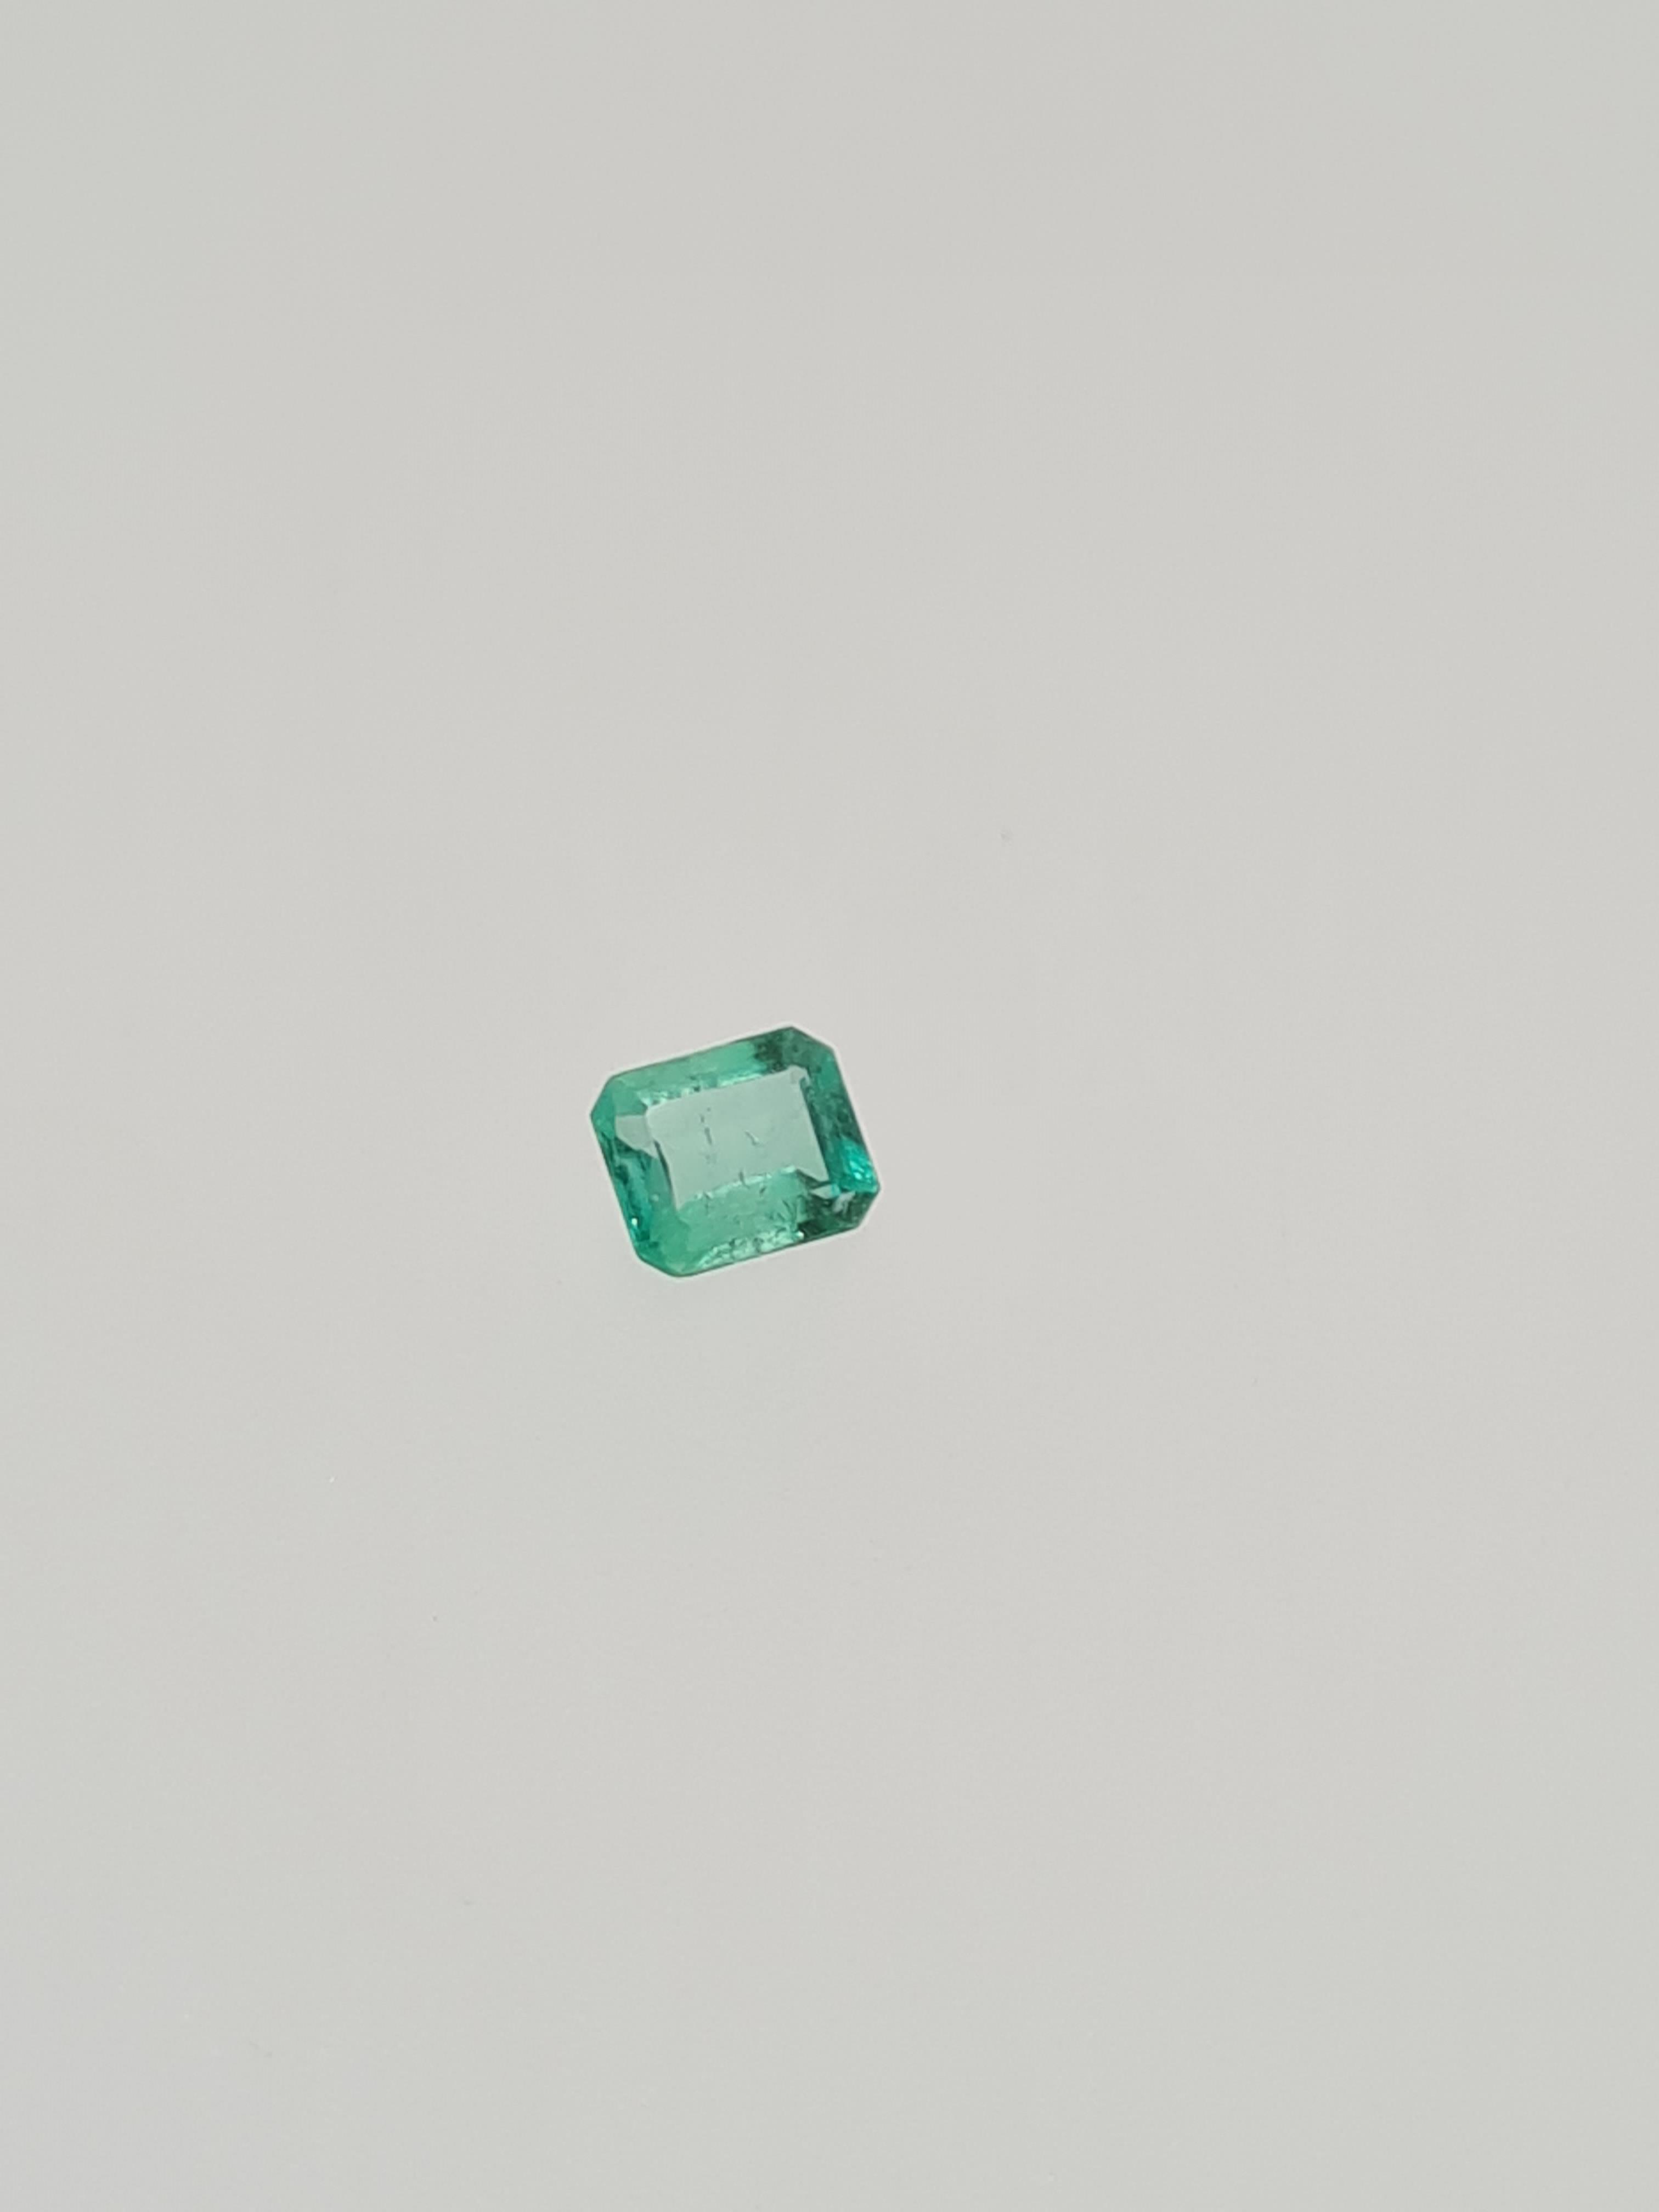 Emerald step cut gem stone - Image 4 of 5